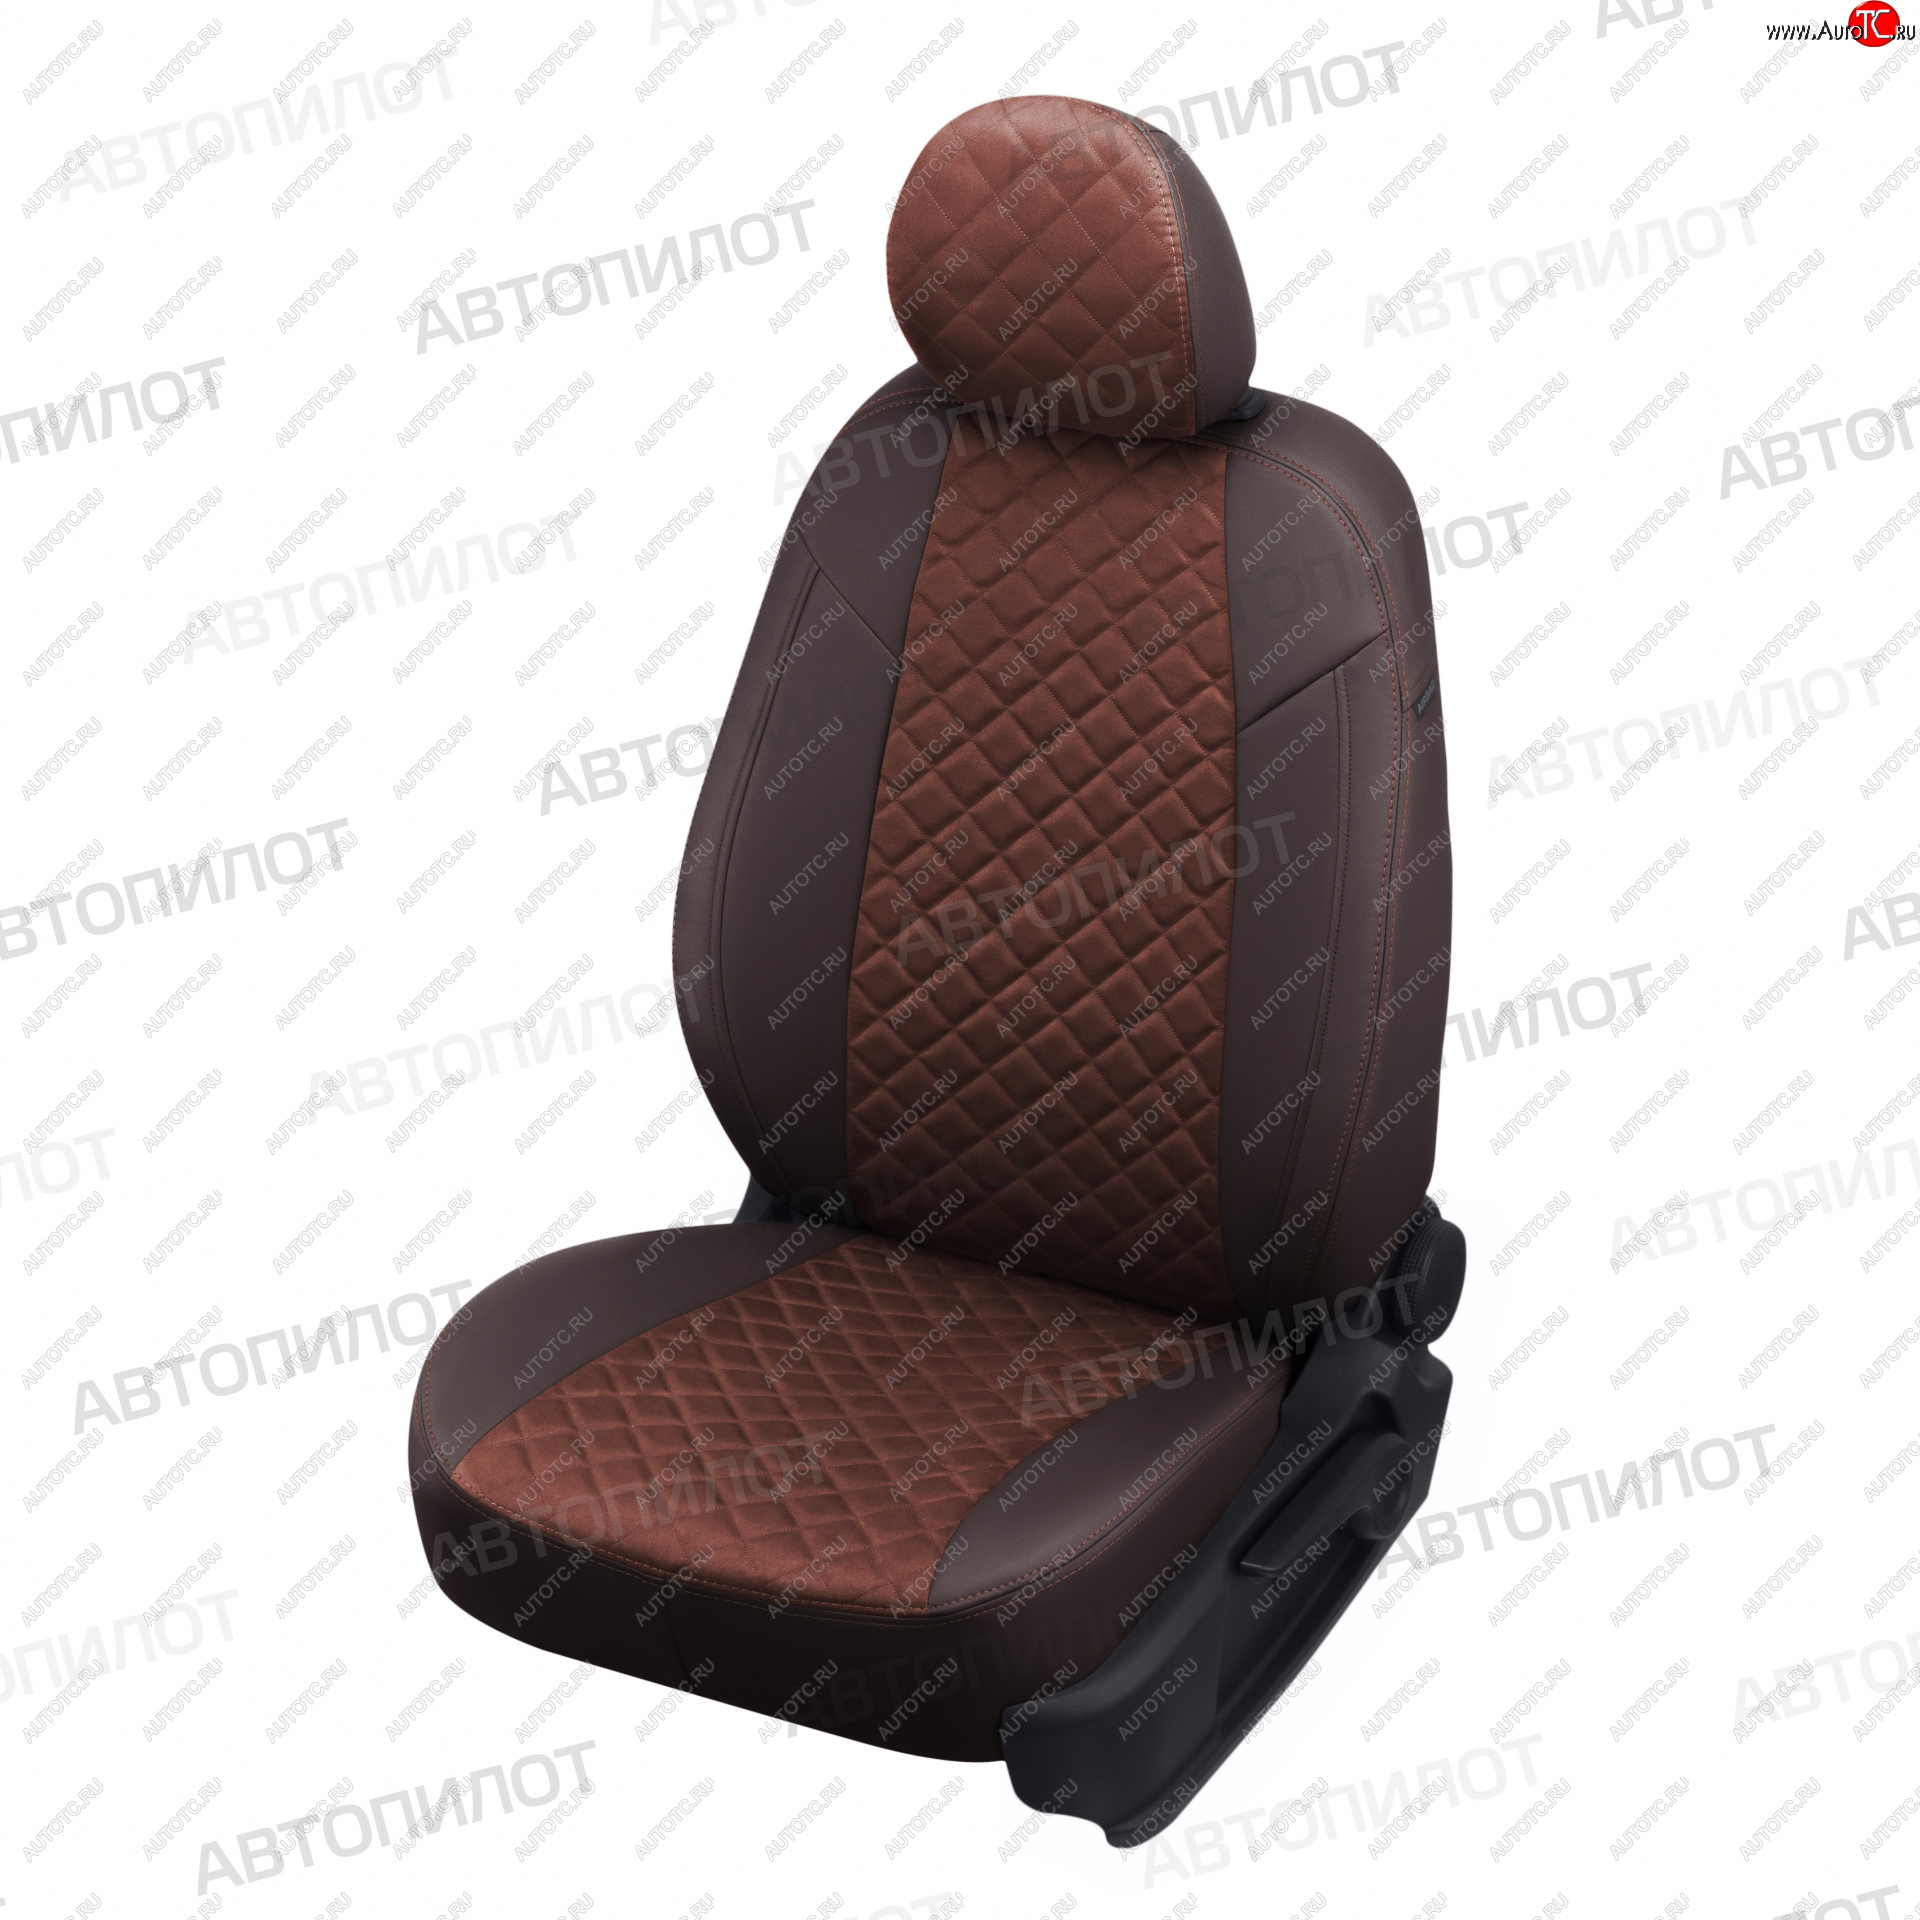 14 499 р. Чехлы сидений (Titanium, экокожа/алькантара) Автопилот Ромб  Ford Mondeo (2007-2014) (шоколад)